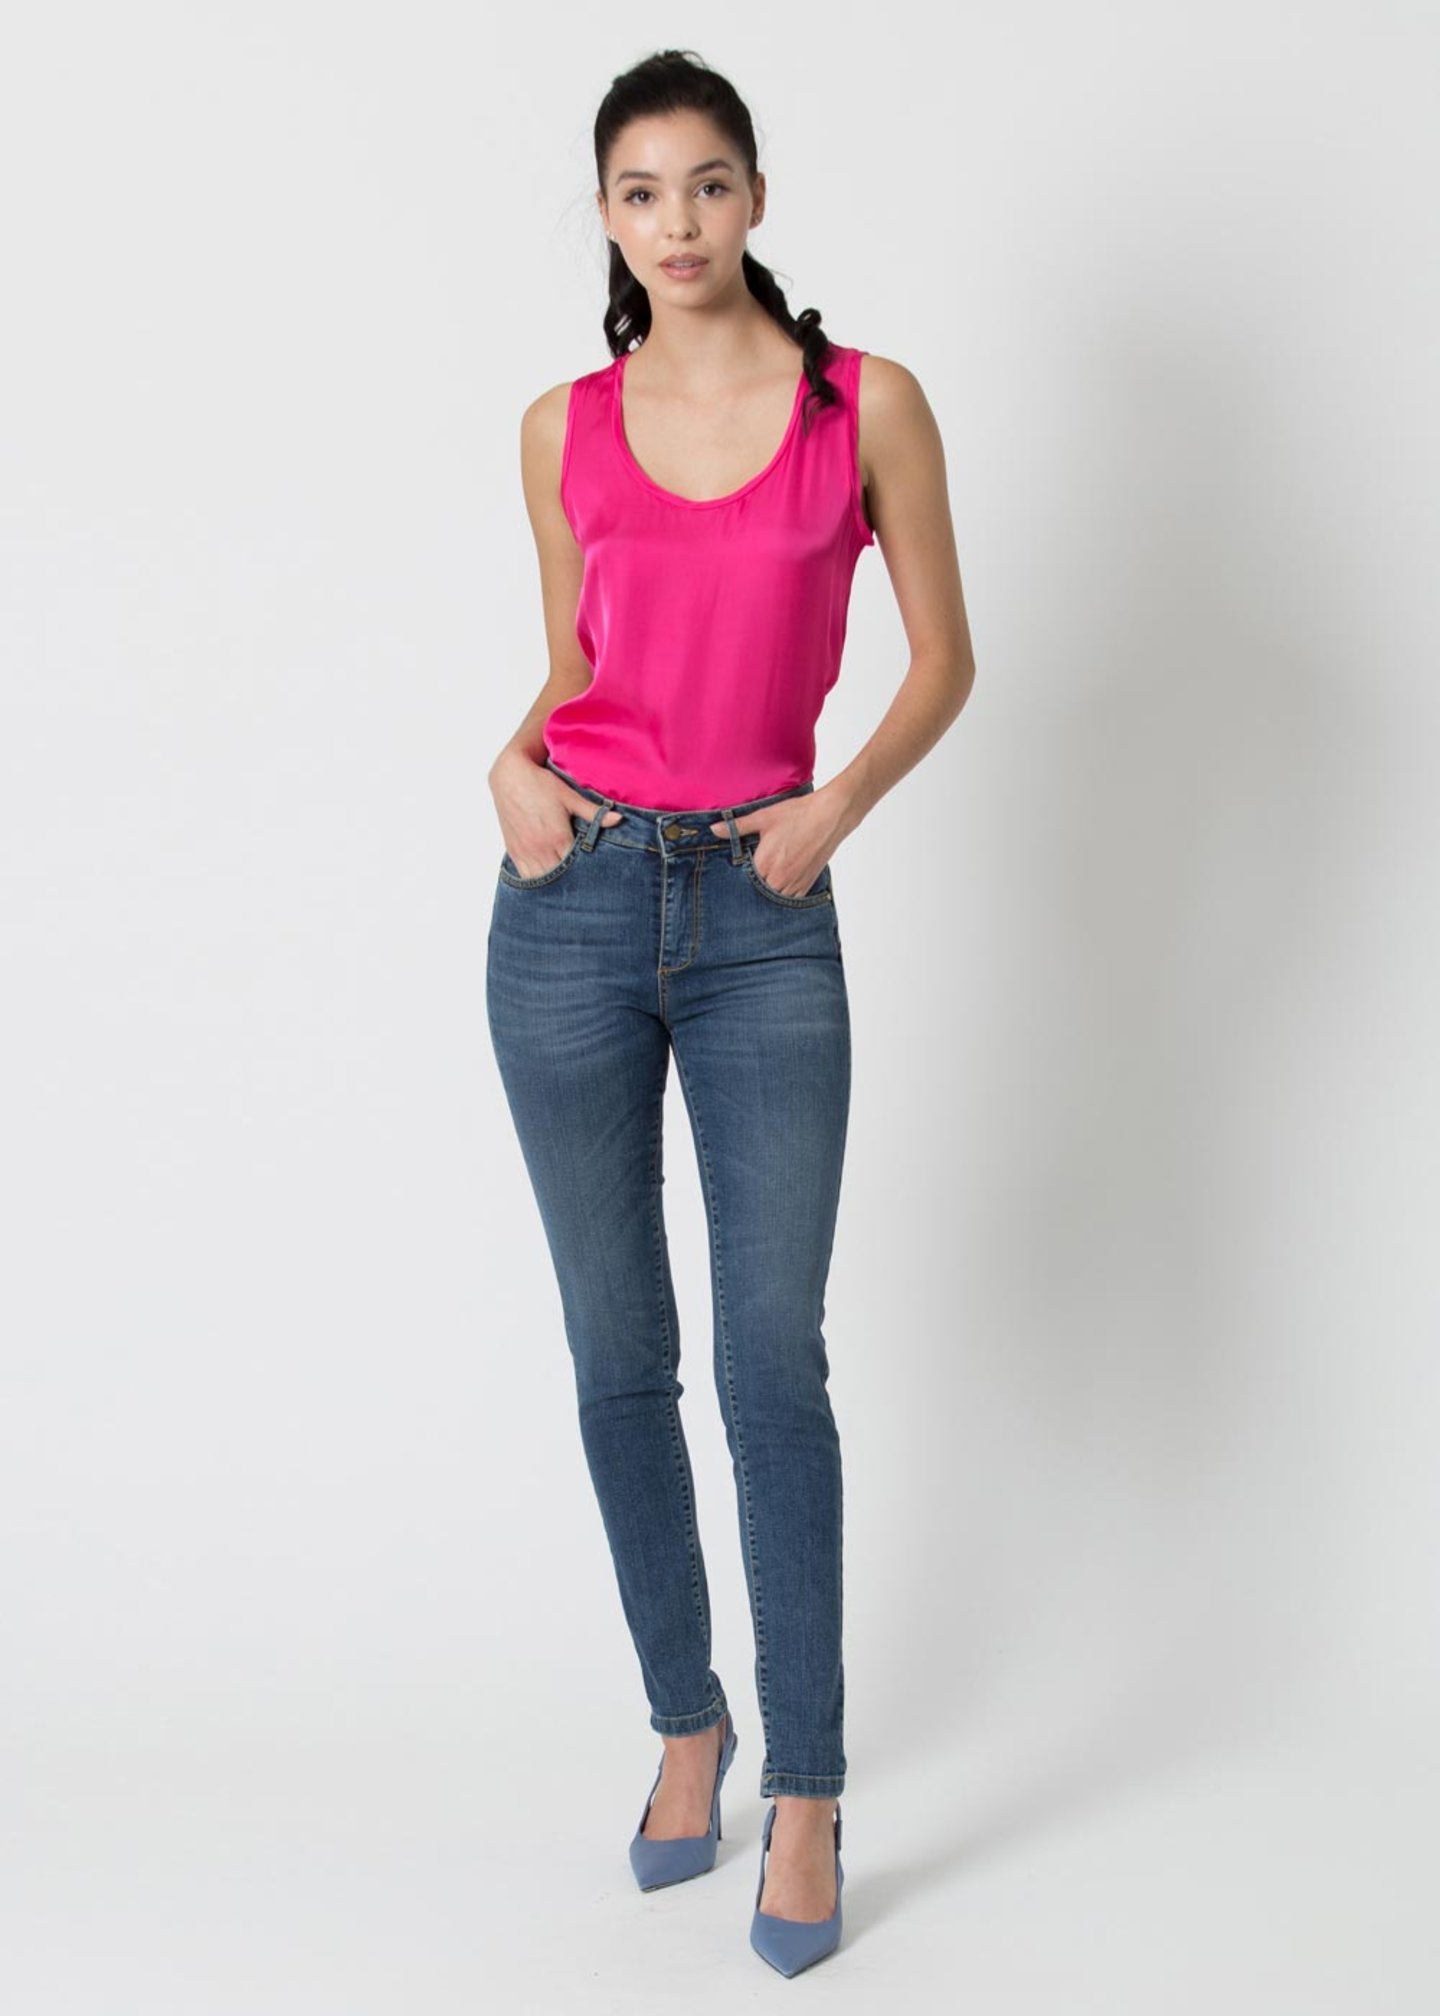 Jeans Kocca Skinny Fit / Jeans - Ideal Moda